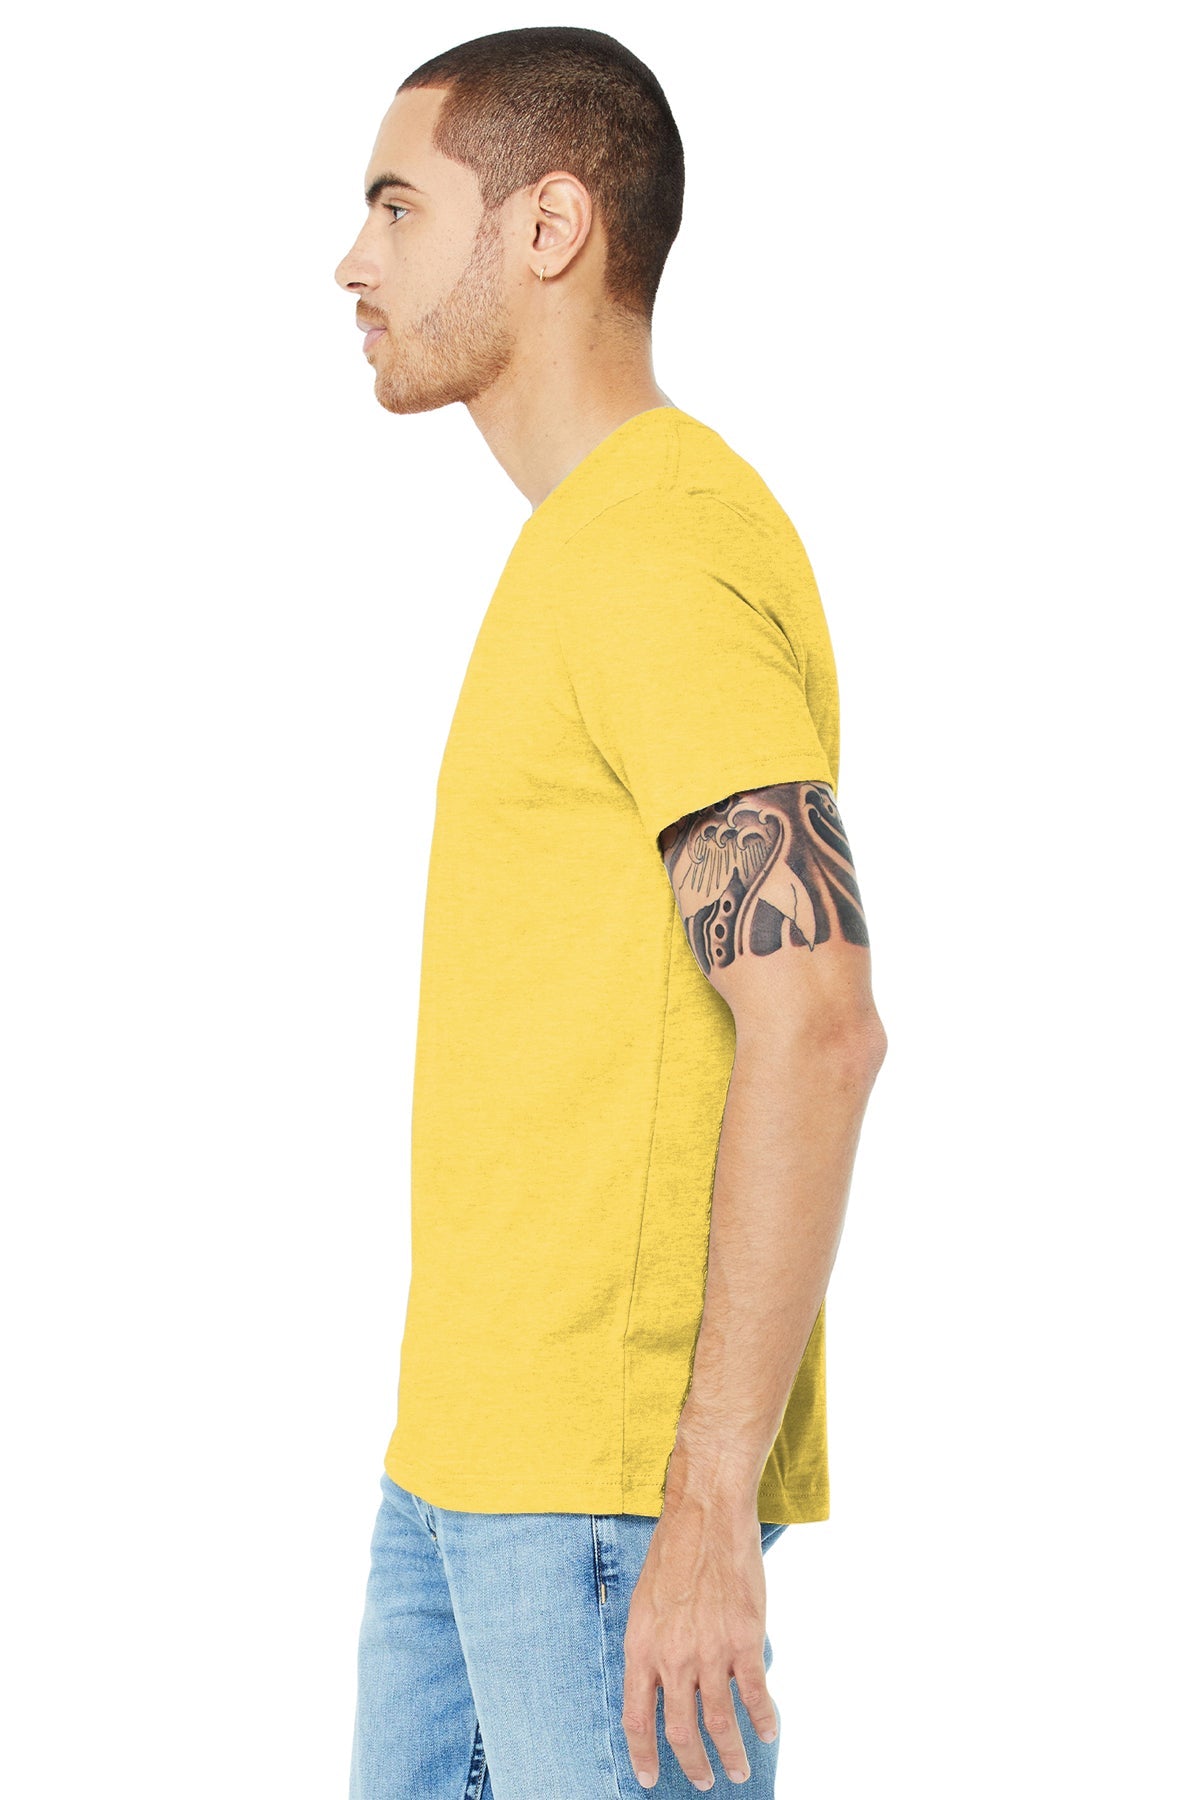 bella + canvas unisex jersey short sleeve t-shirt 3001c hthr yellow gold